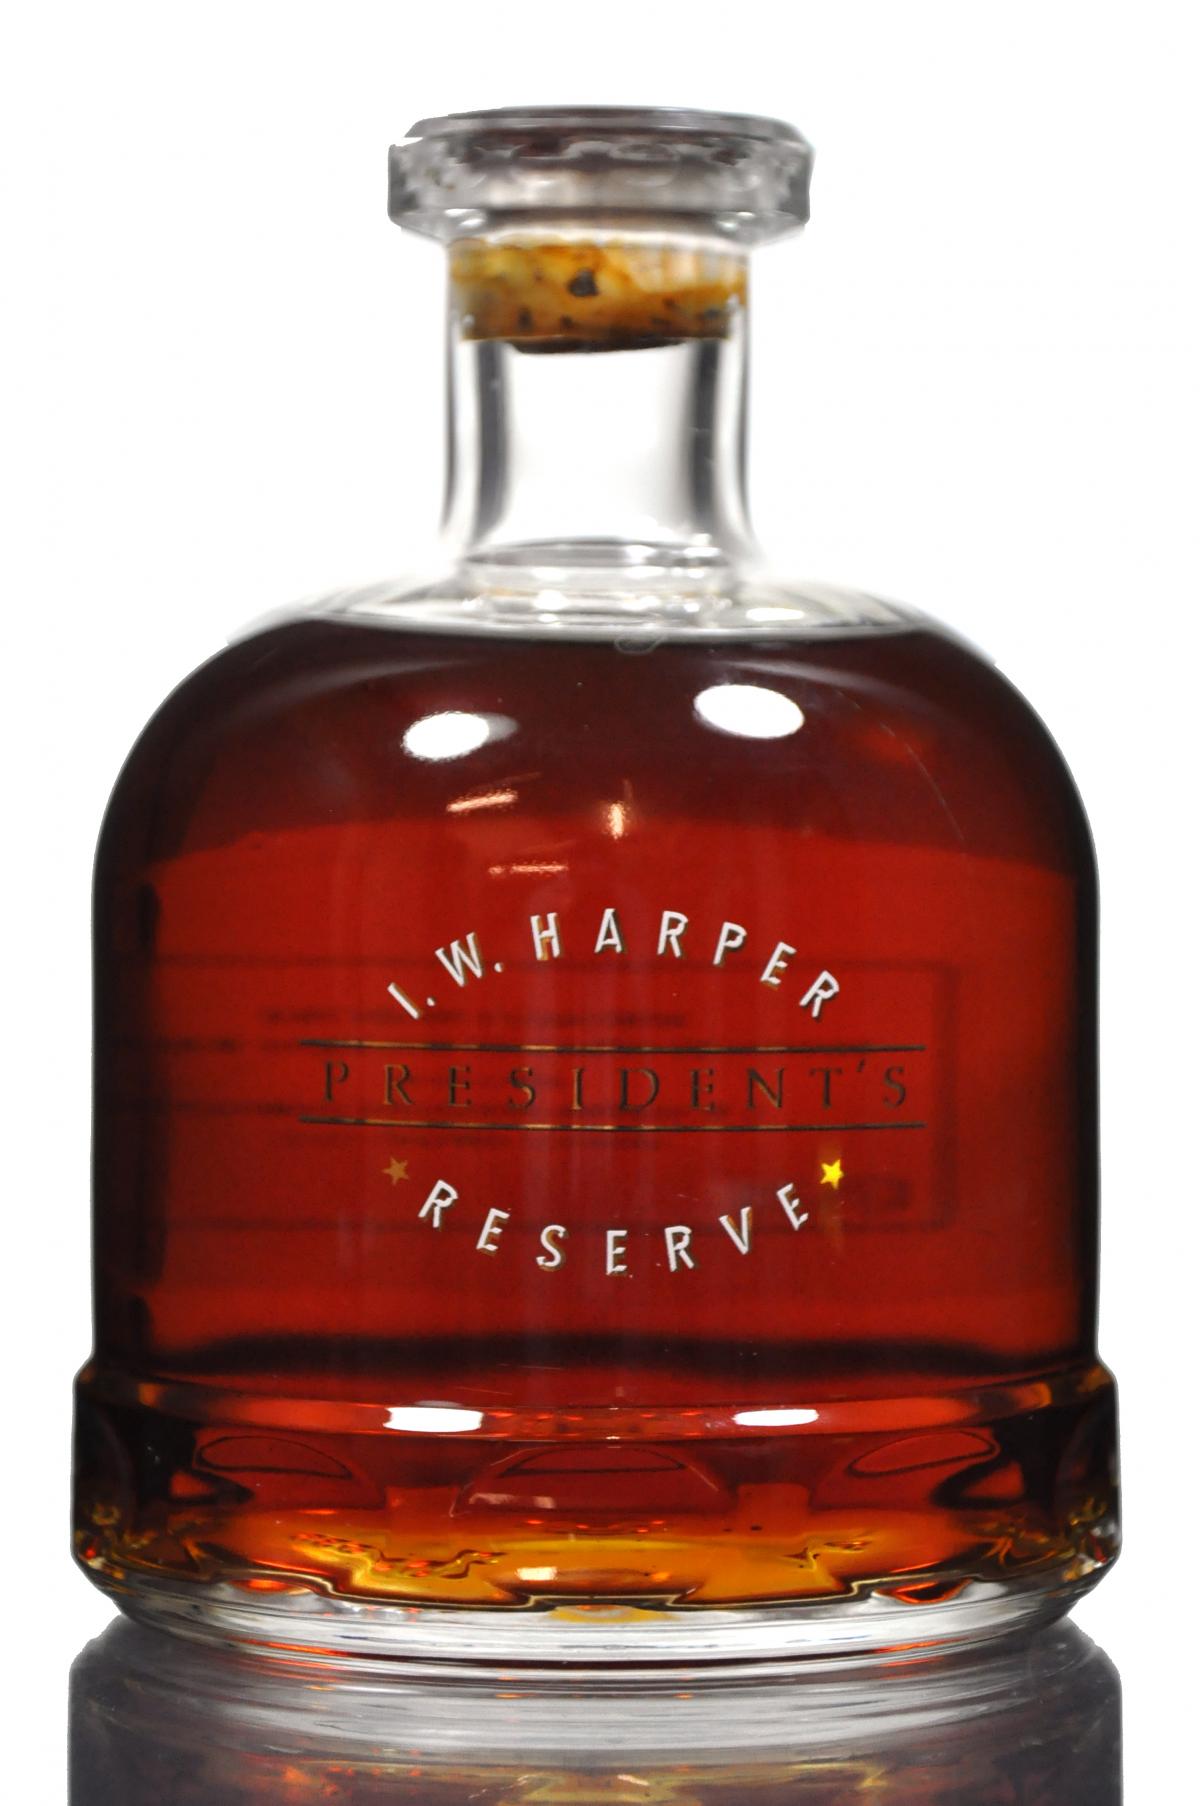 I W Harper - Presidents Reserve